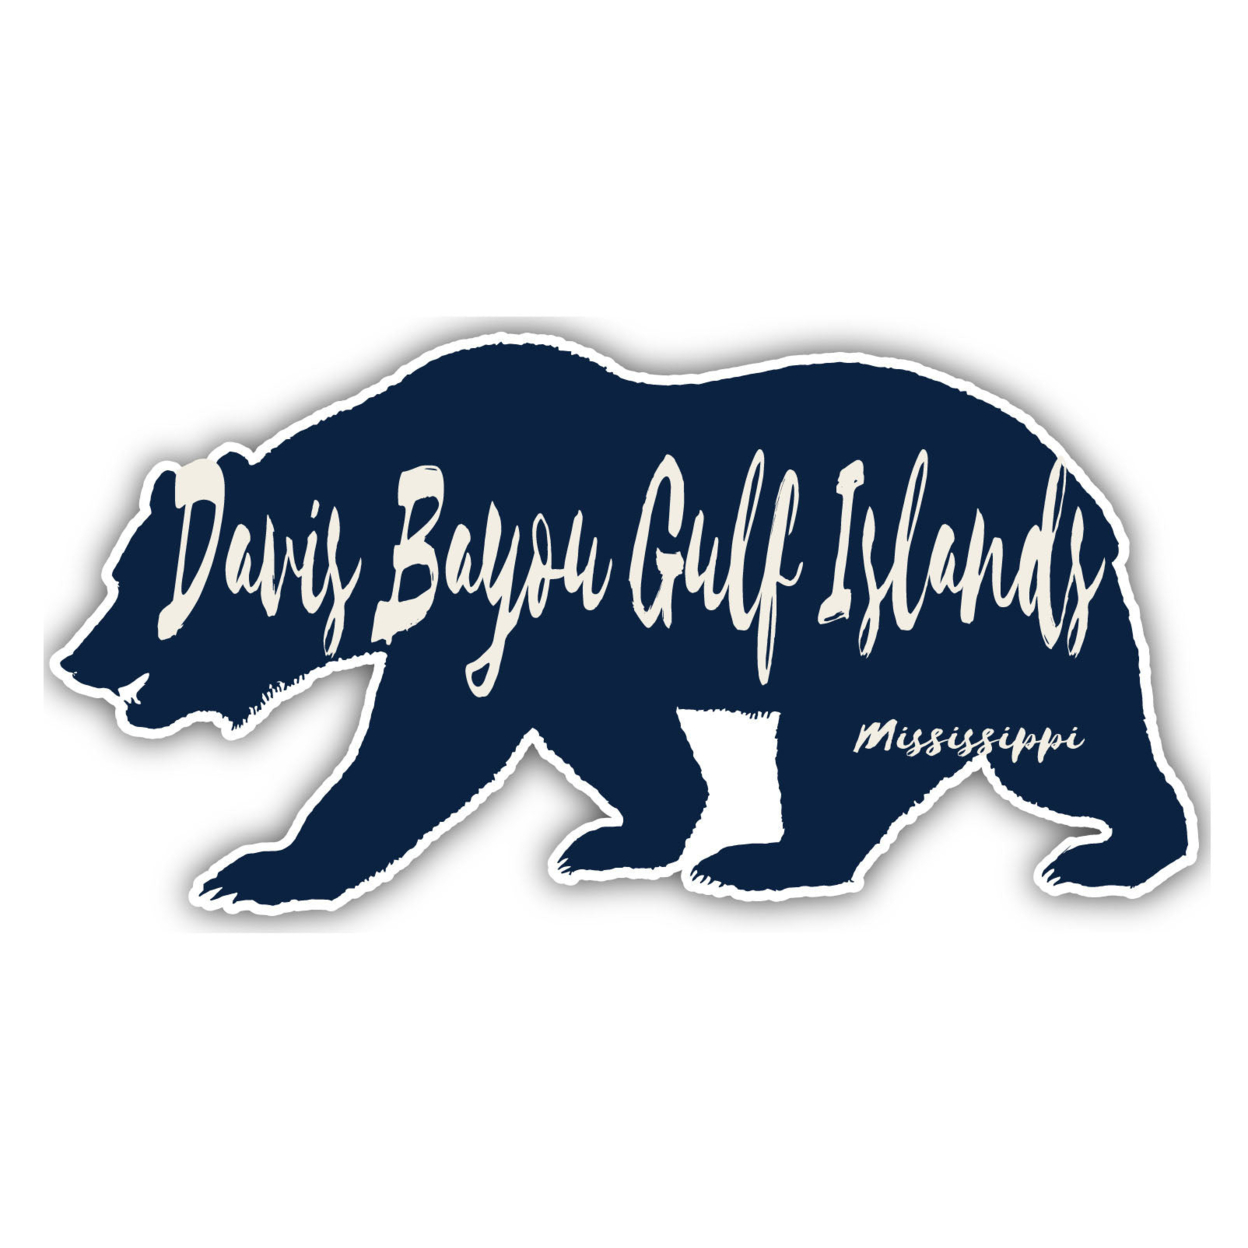 Davis Bayou Gulf Islands Mississippi Souvenir Decorative Stickers (Choose Theme And Size) - 4-Pack, 2-Inch, Bear